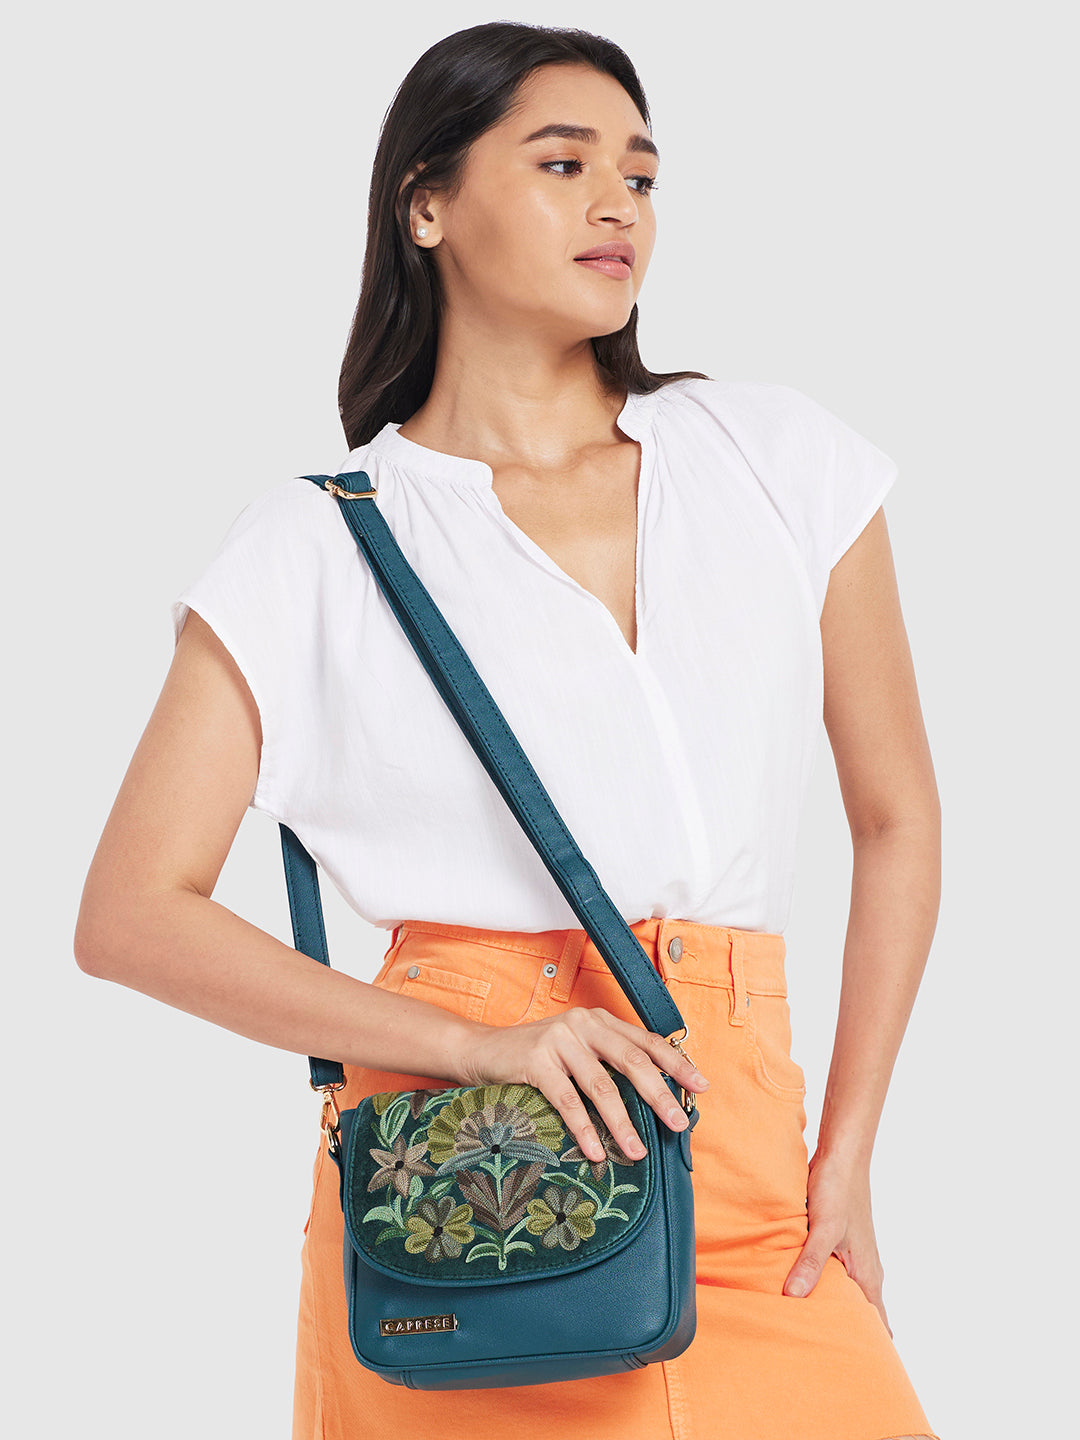 Caprese Tresna Embroidery Large Sling  Handbag